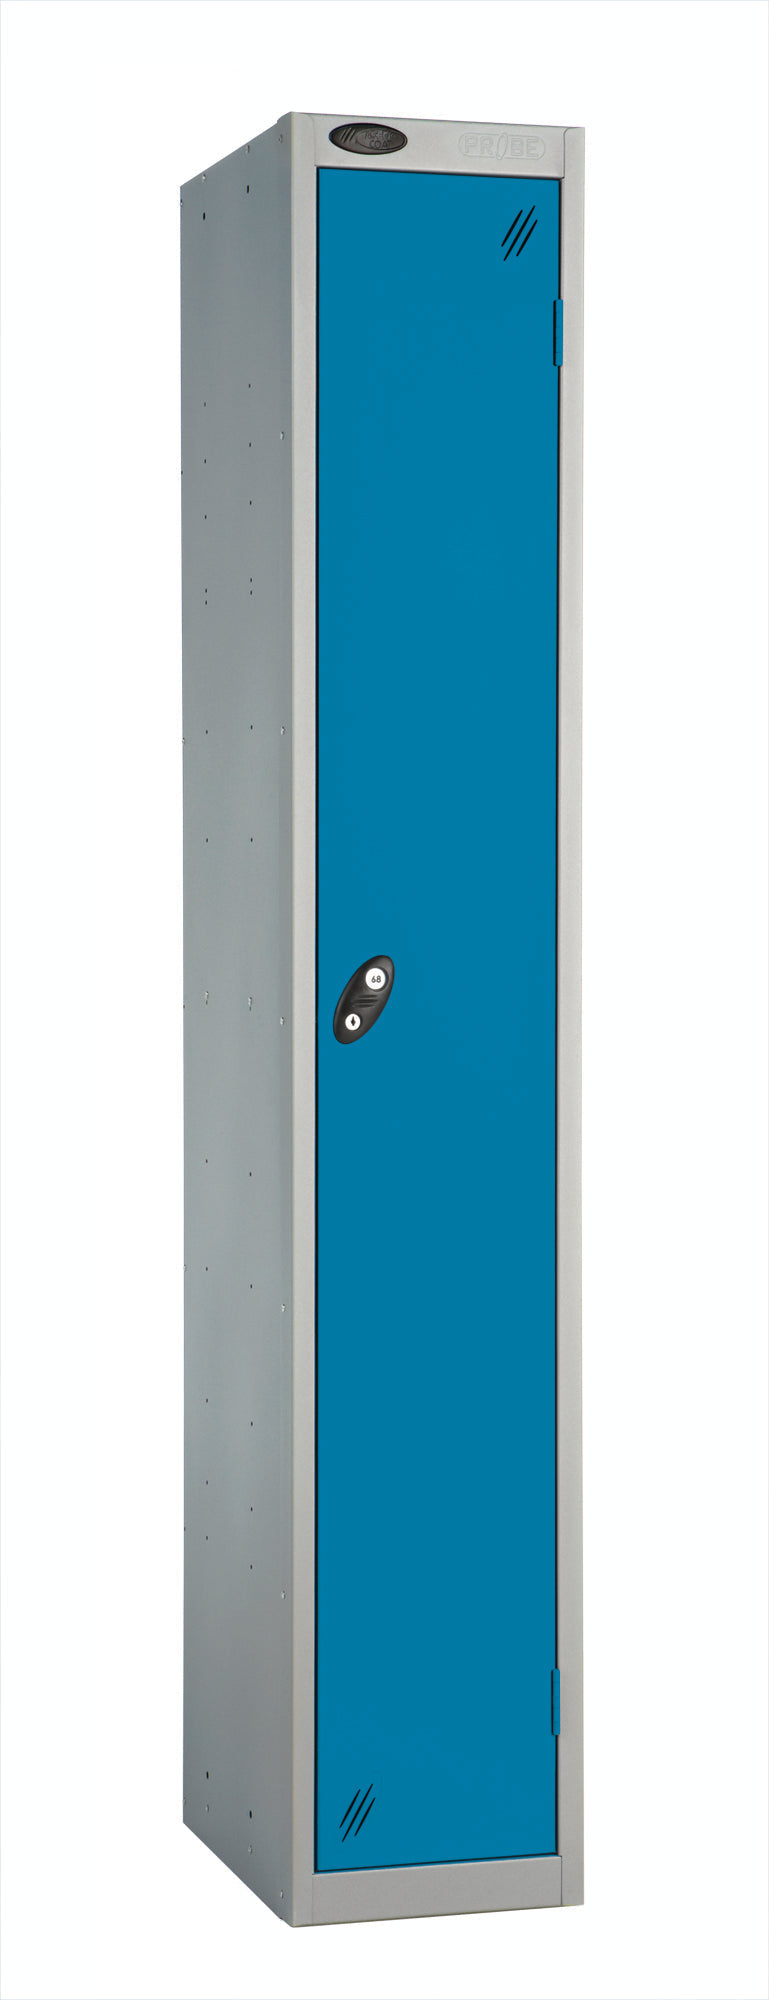 PROBEBOX STANDARD 1 NEST STEEL LOCKERS - ELECTRIC BLUE 1 DOOR Storage Lockers > Lockers > Cabinets > Storage > Probe > One Stop For Safety   